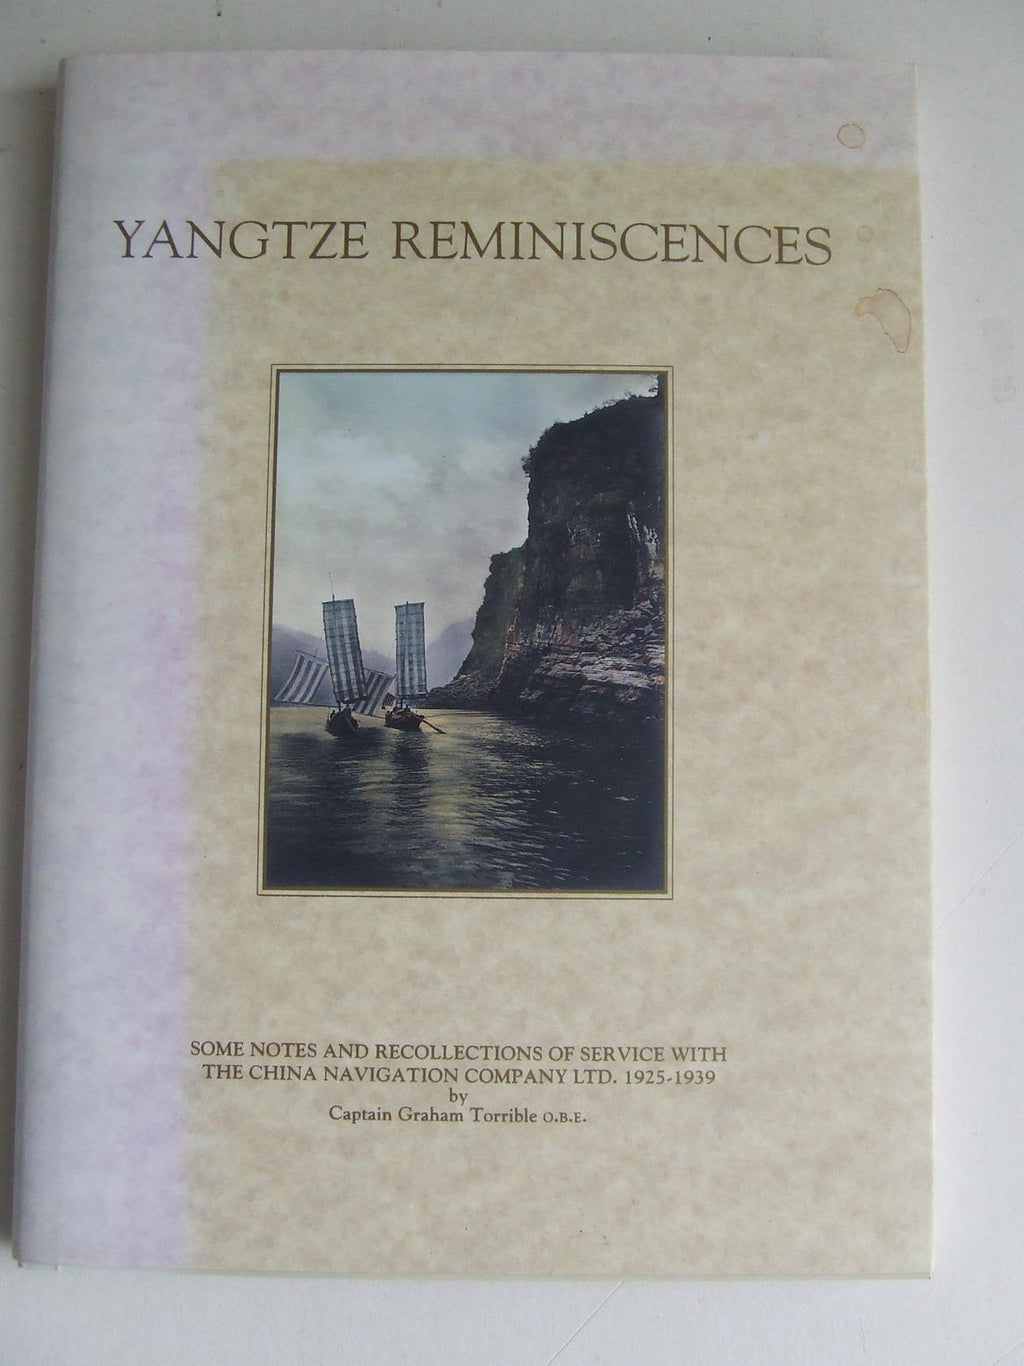 Yangtze Reminiscences